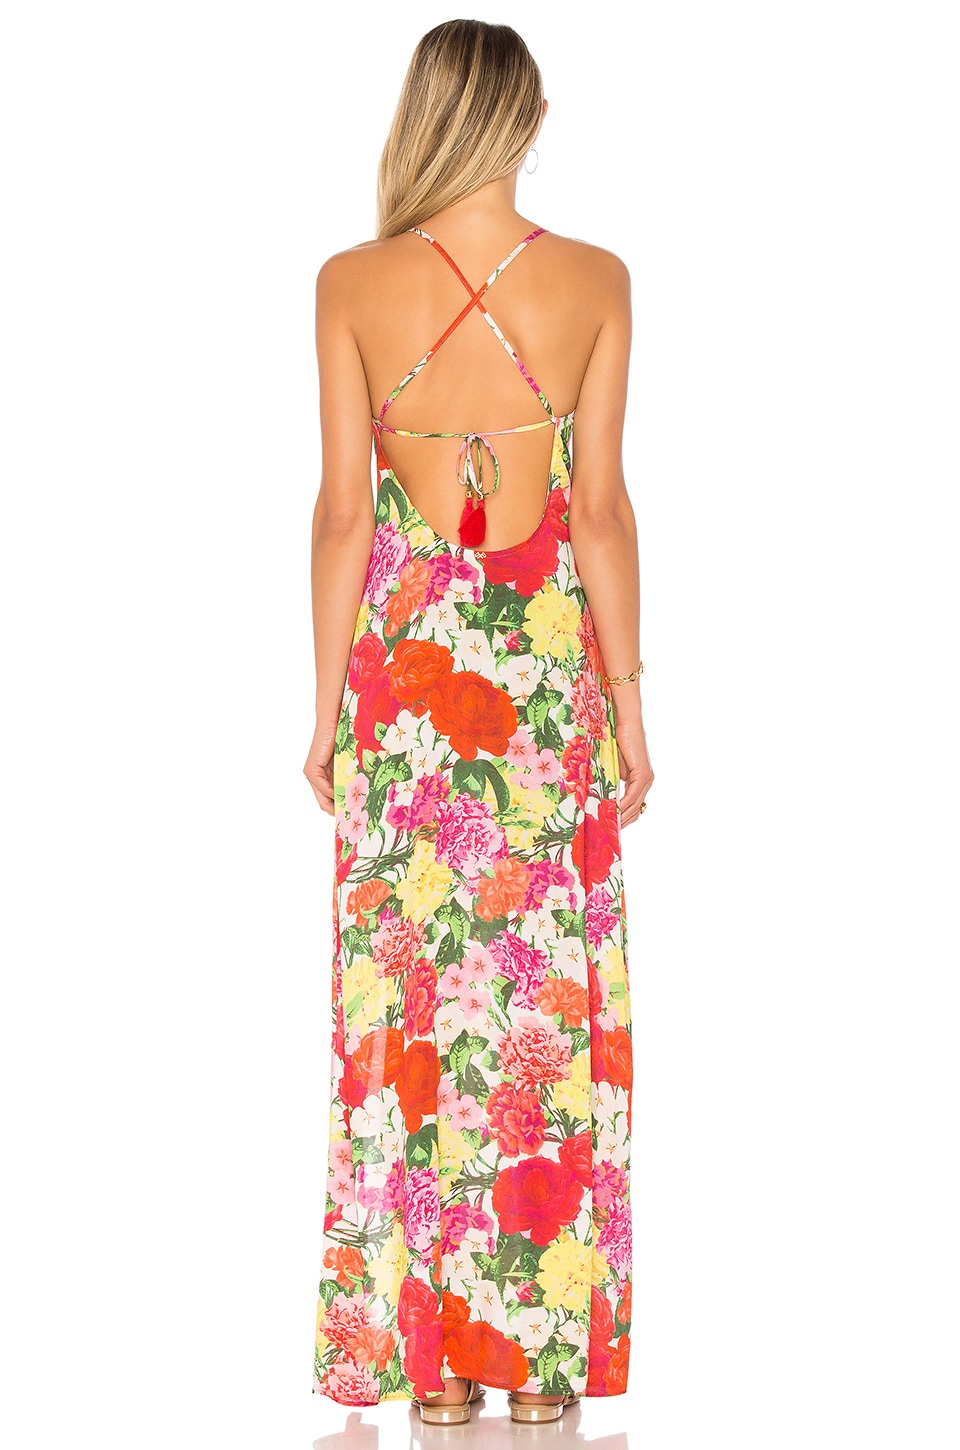 PQ Spellbound Dress in Floral | REVOLVE